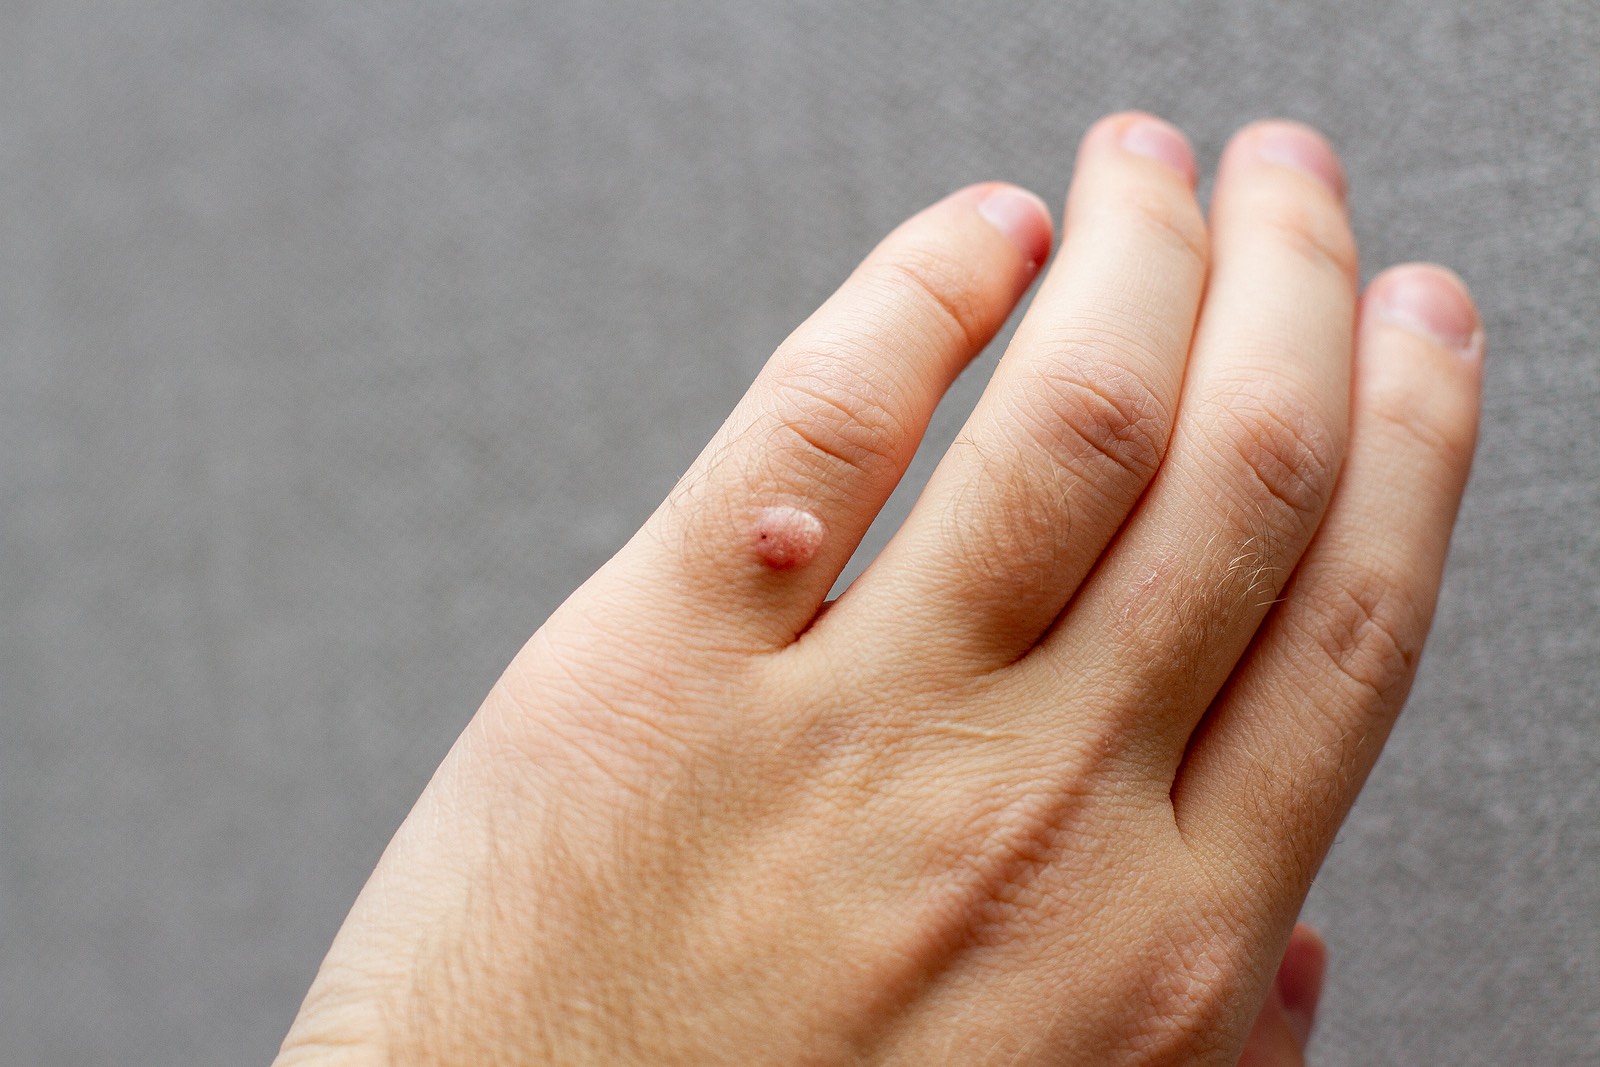 finger wart on hand. health concept. body wart